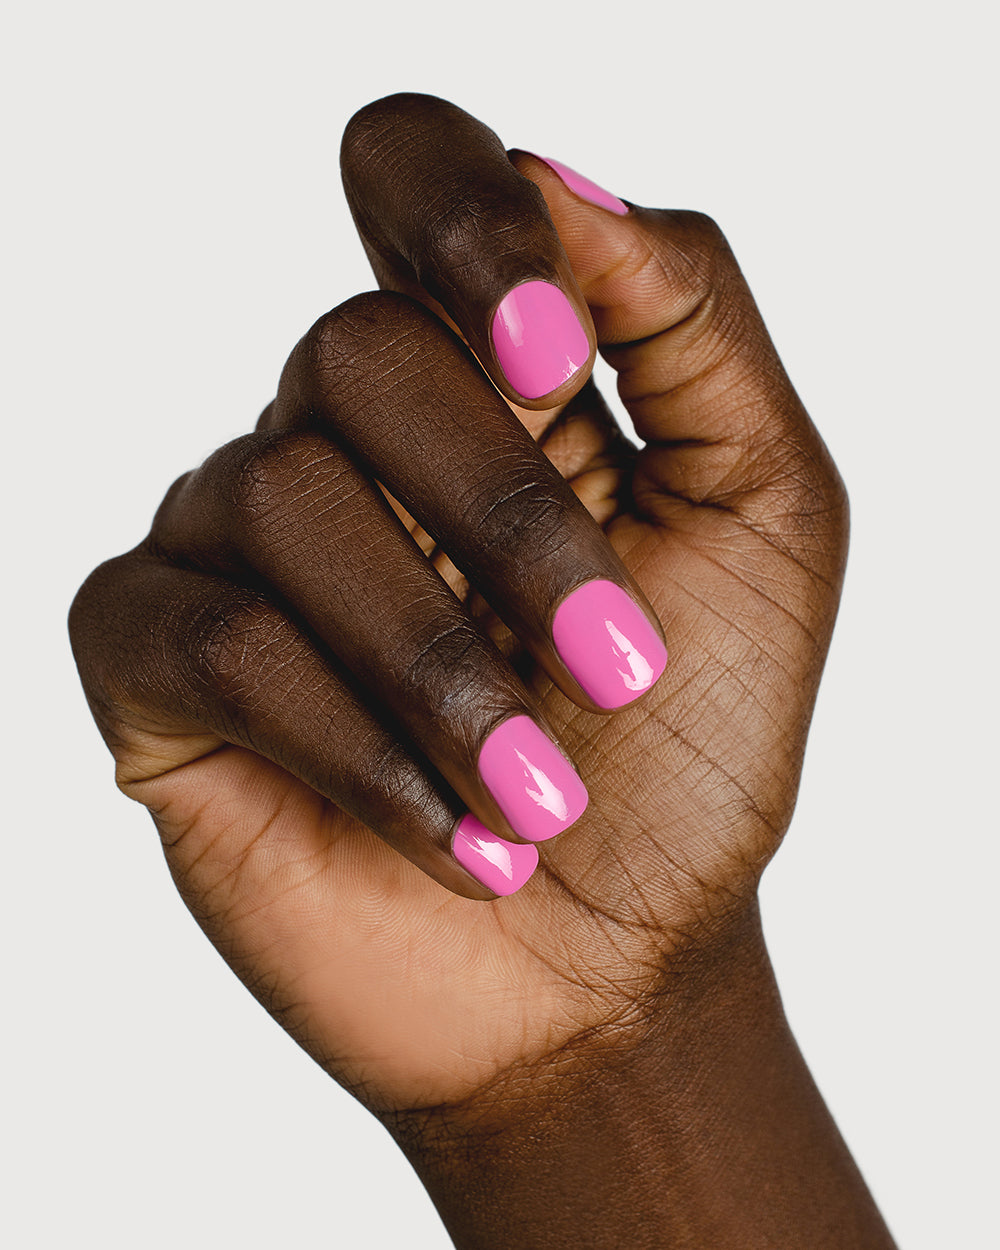 Bright mid-tone fuchsia nail polish hand swatch on dark skin tone